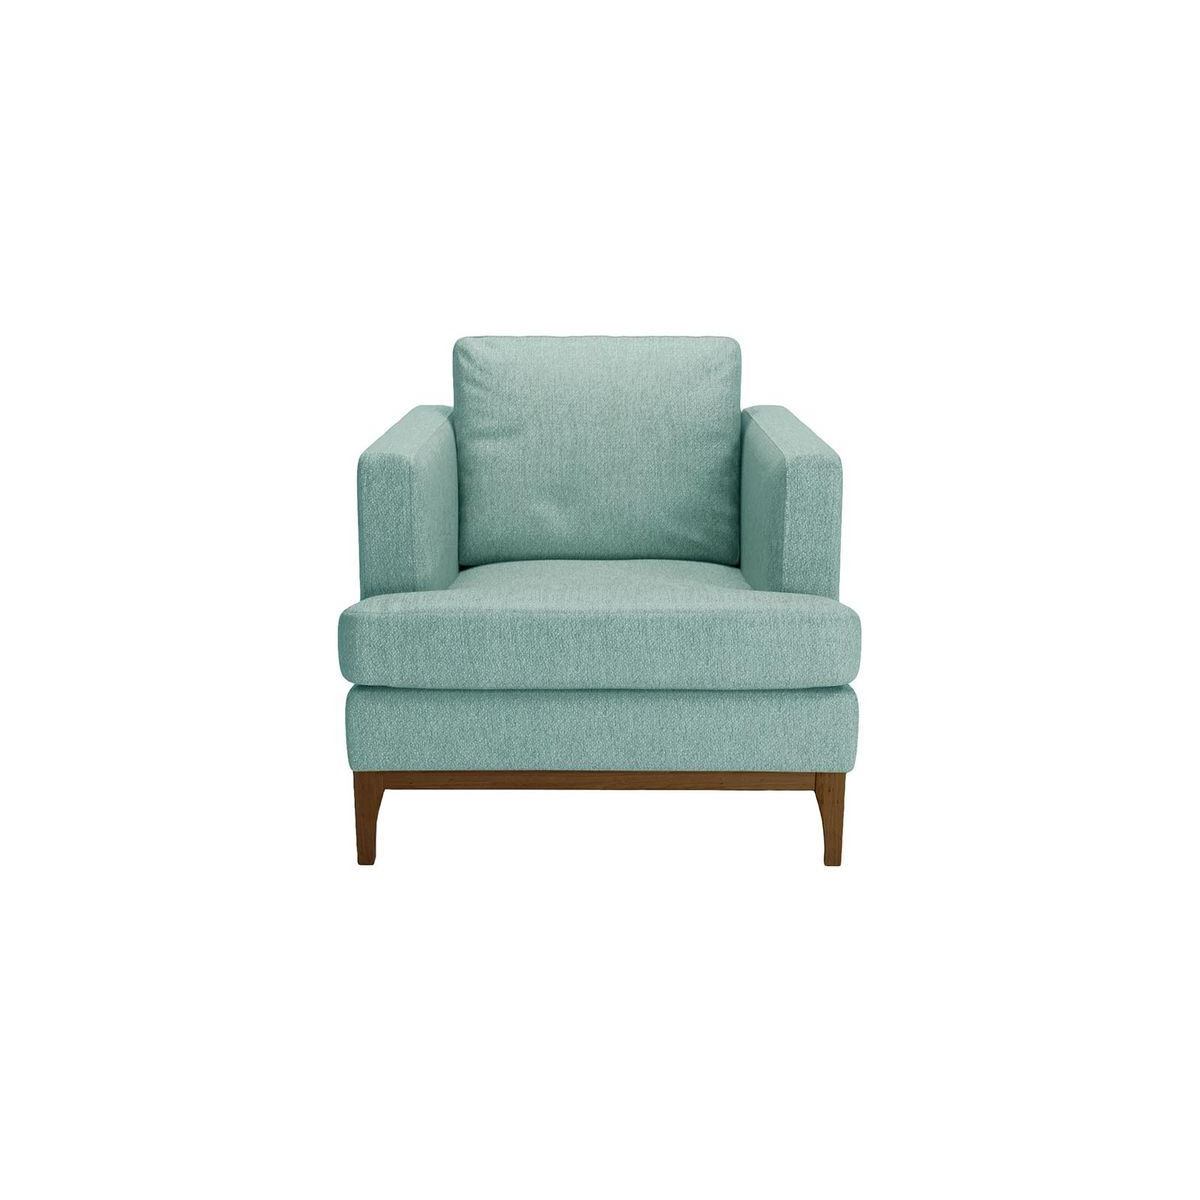 Scarlett Eco Armchair, Turquoise, Leg colour: dark oak - image 1